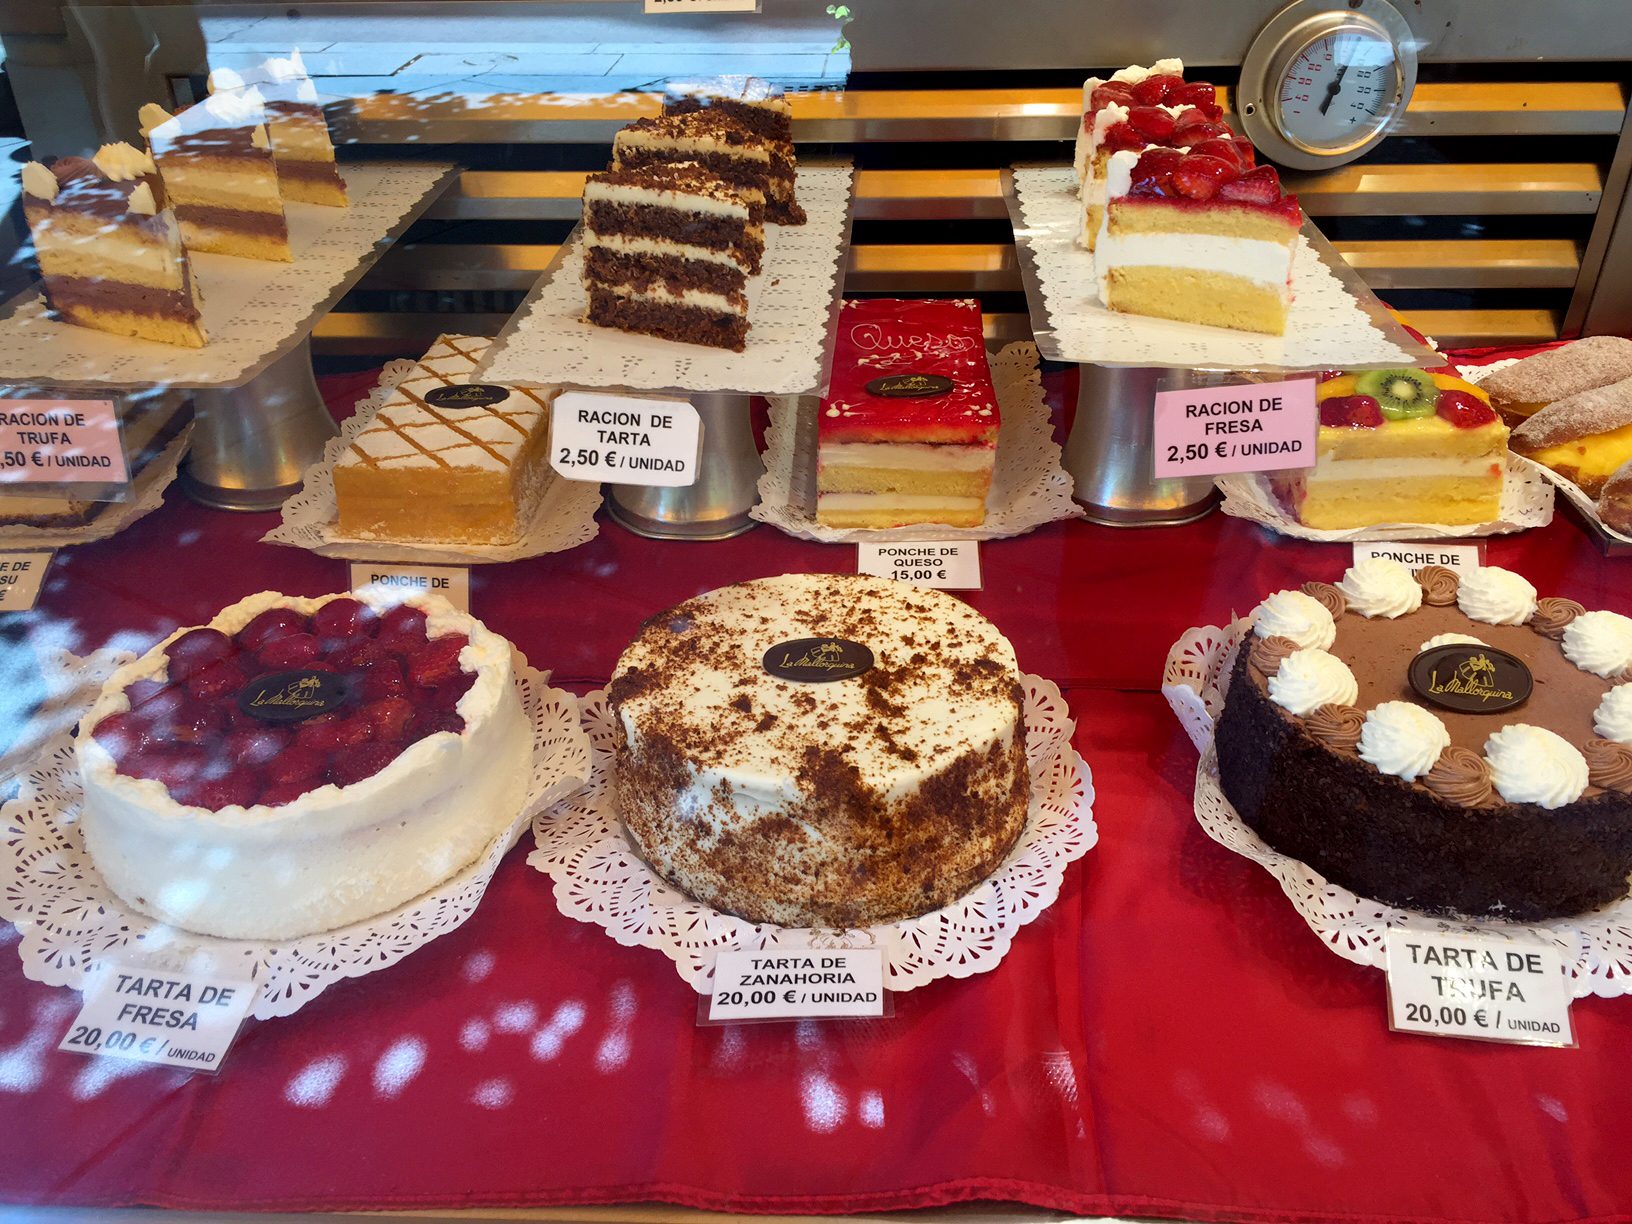 The cakes (tartas) at La Mallorquina  